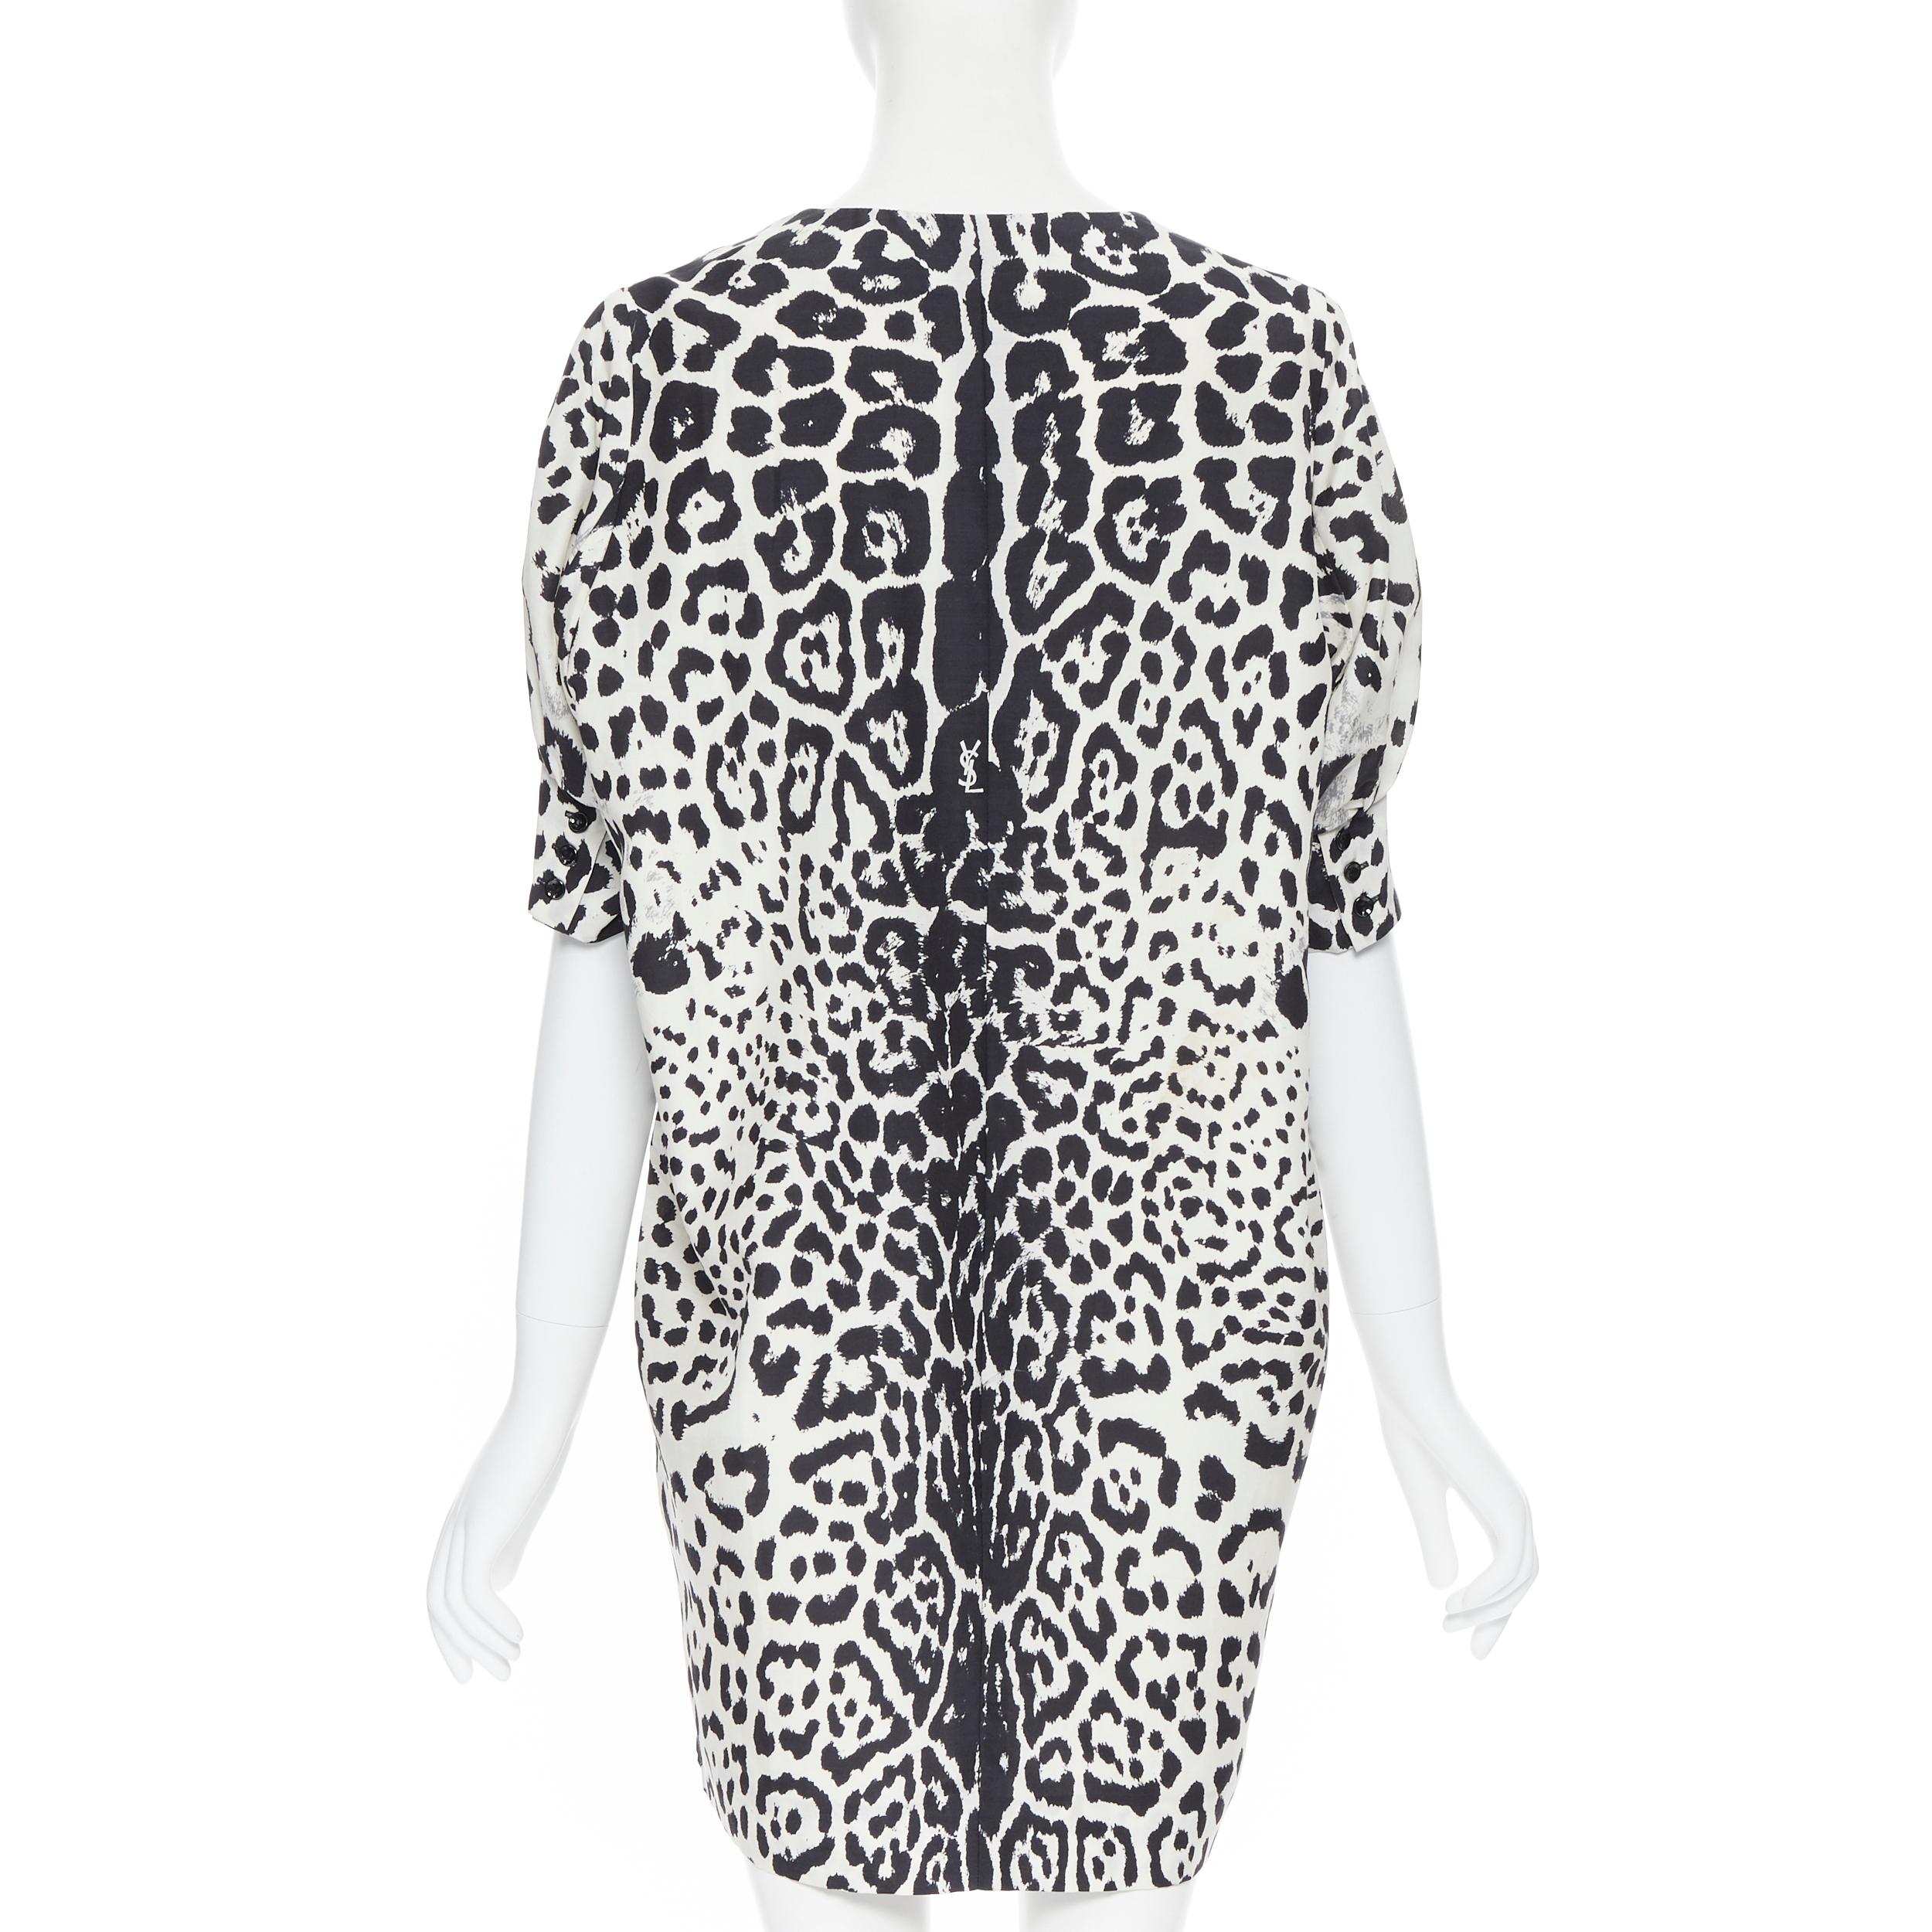 YVES SAINT LAURENT 2012 100% silk black white leopard spot casual dress FR38 2